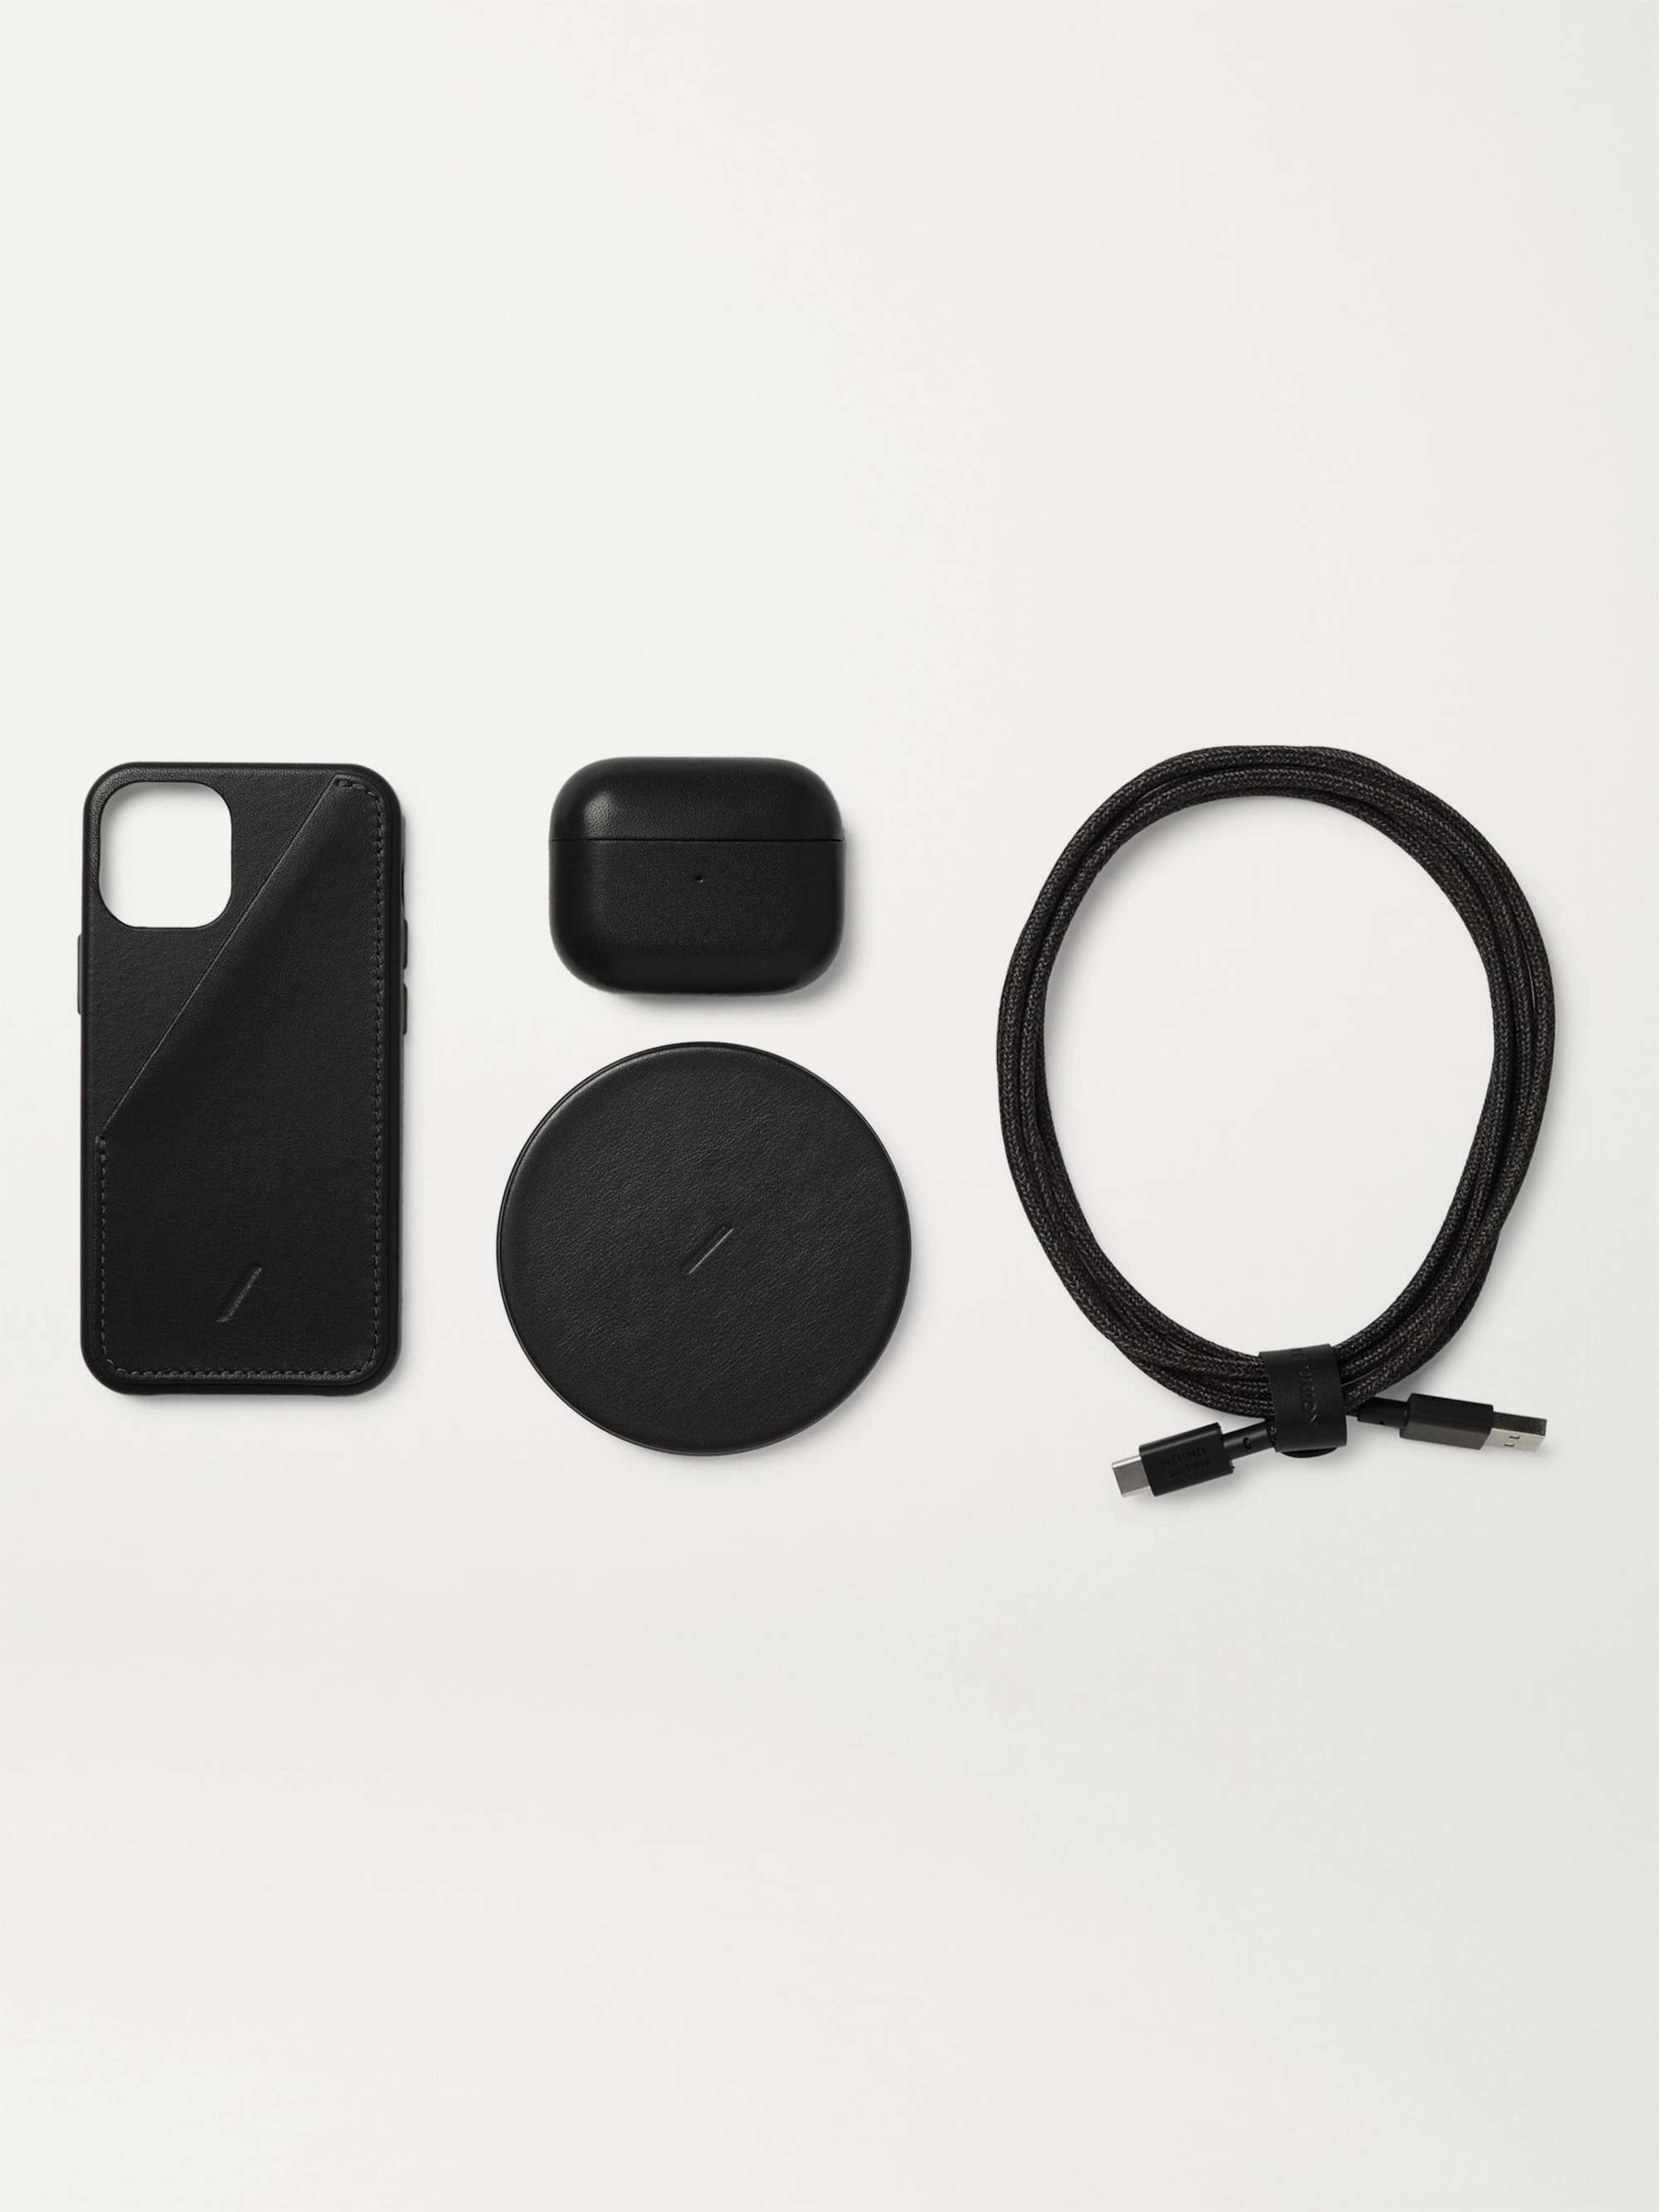 NATIVE UNION Leather iPhone 12 Pro Accessories Bundle for Men | MR PORTER